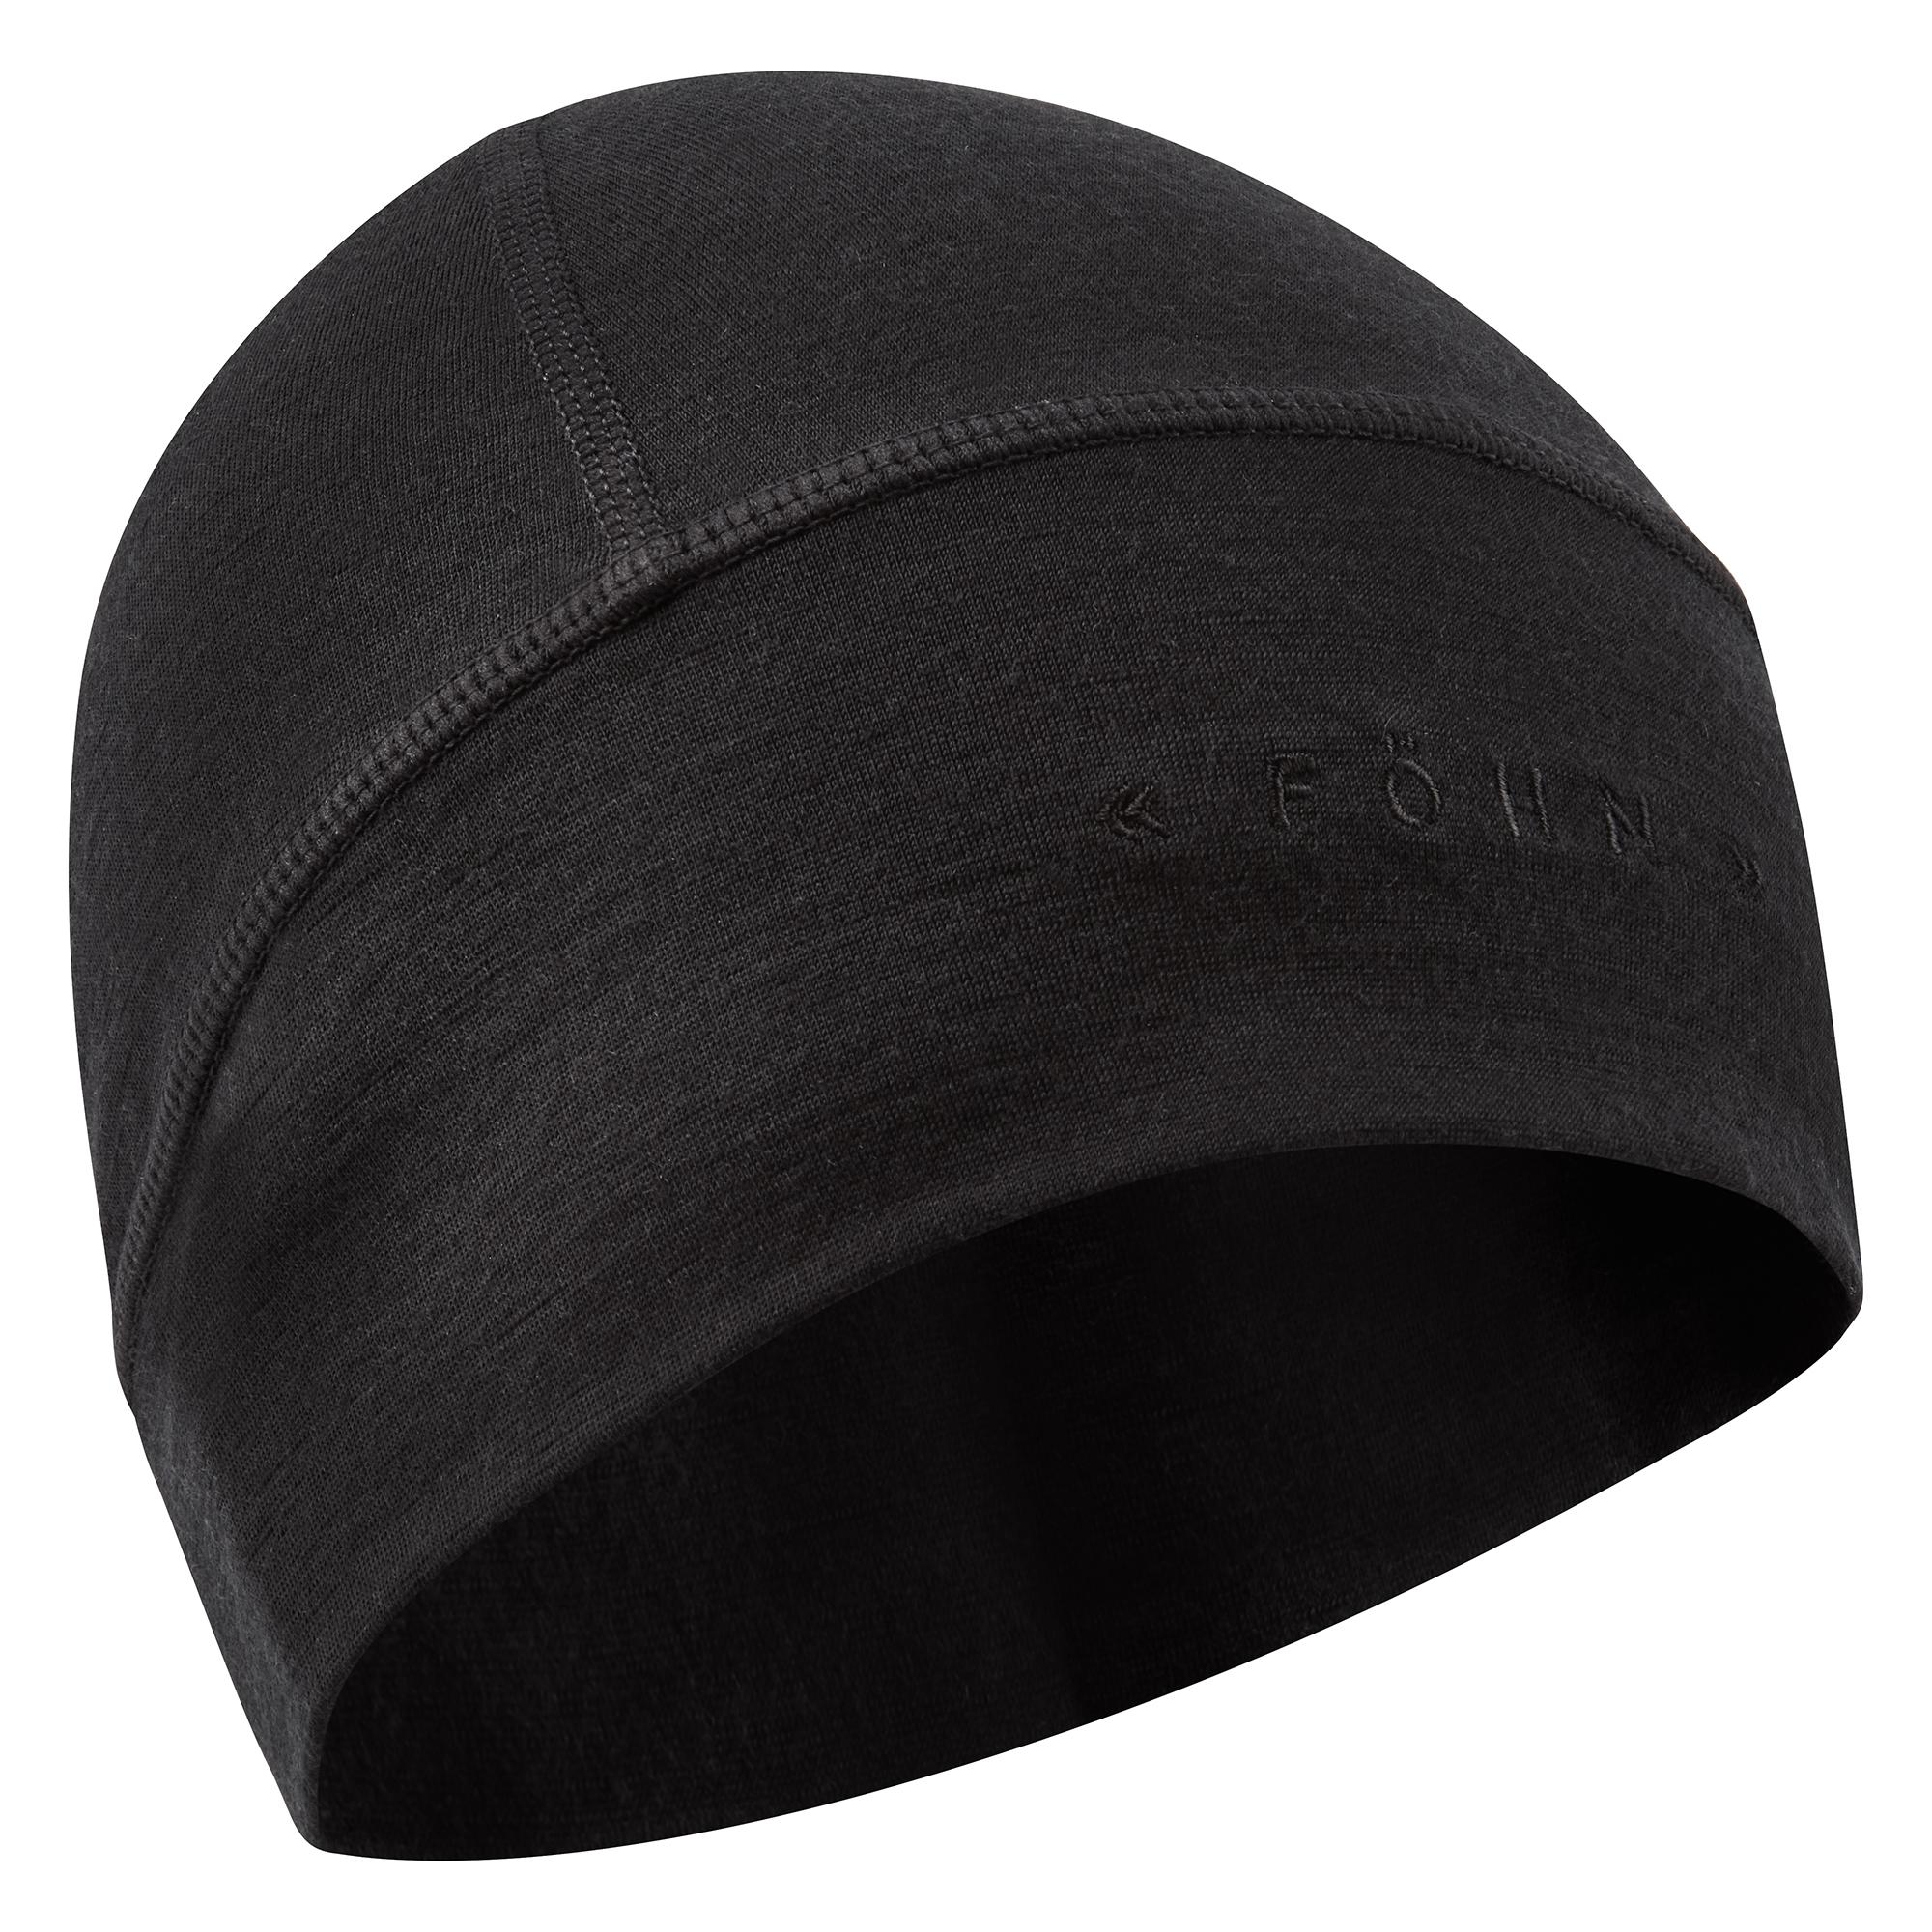 Fhn Merino Hat  Black